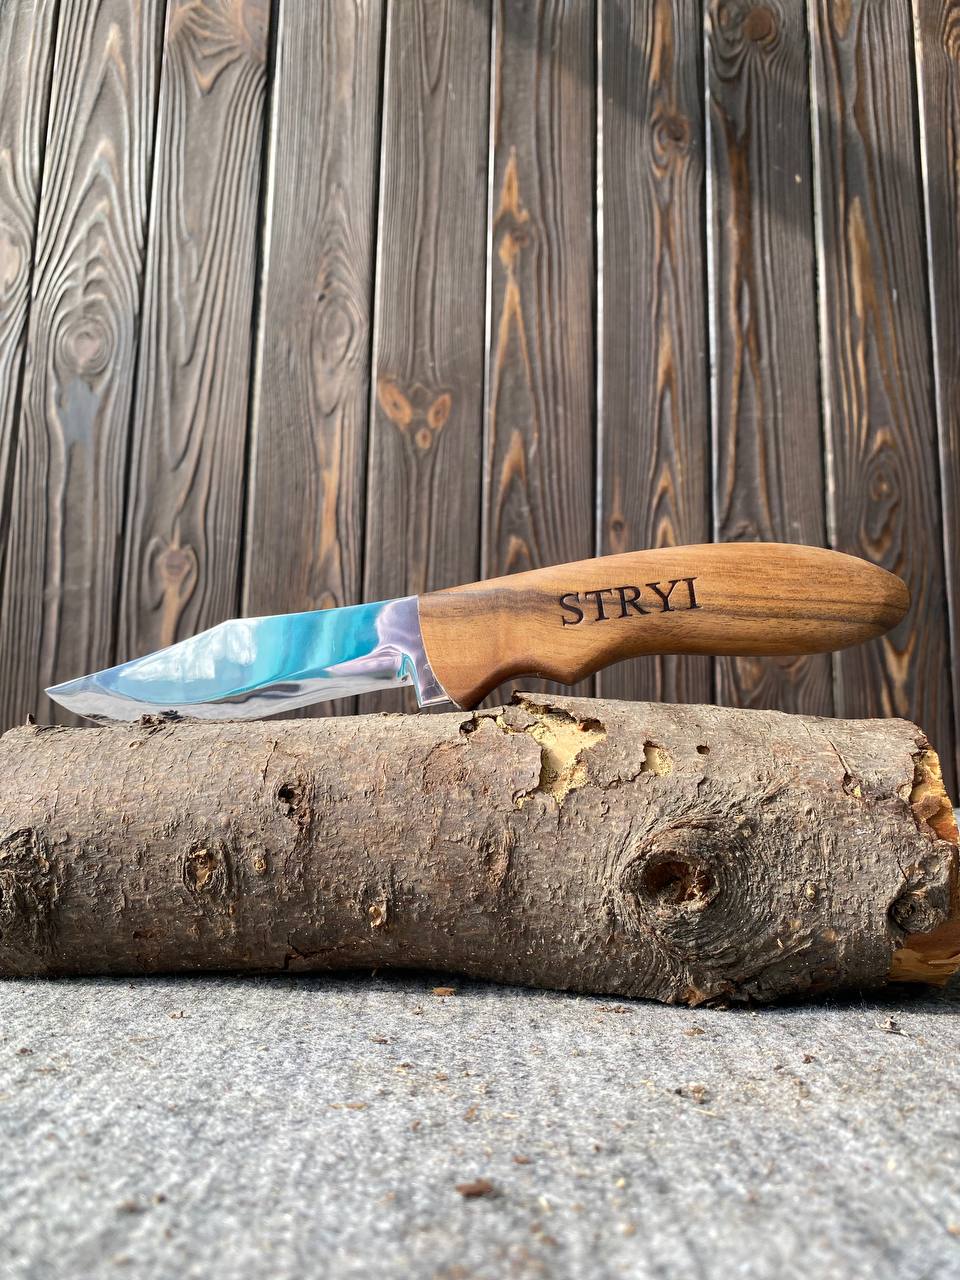 Wood carving force knife STRYI Profi, camping knife, greenwoodworking –  Wood carving tools STRYI